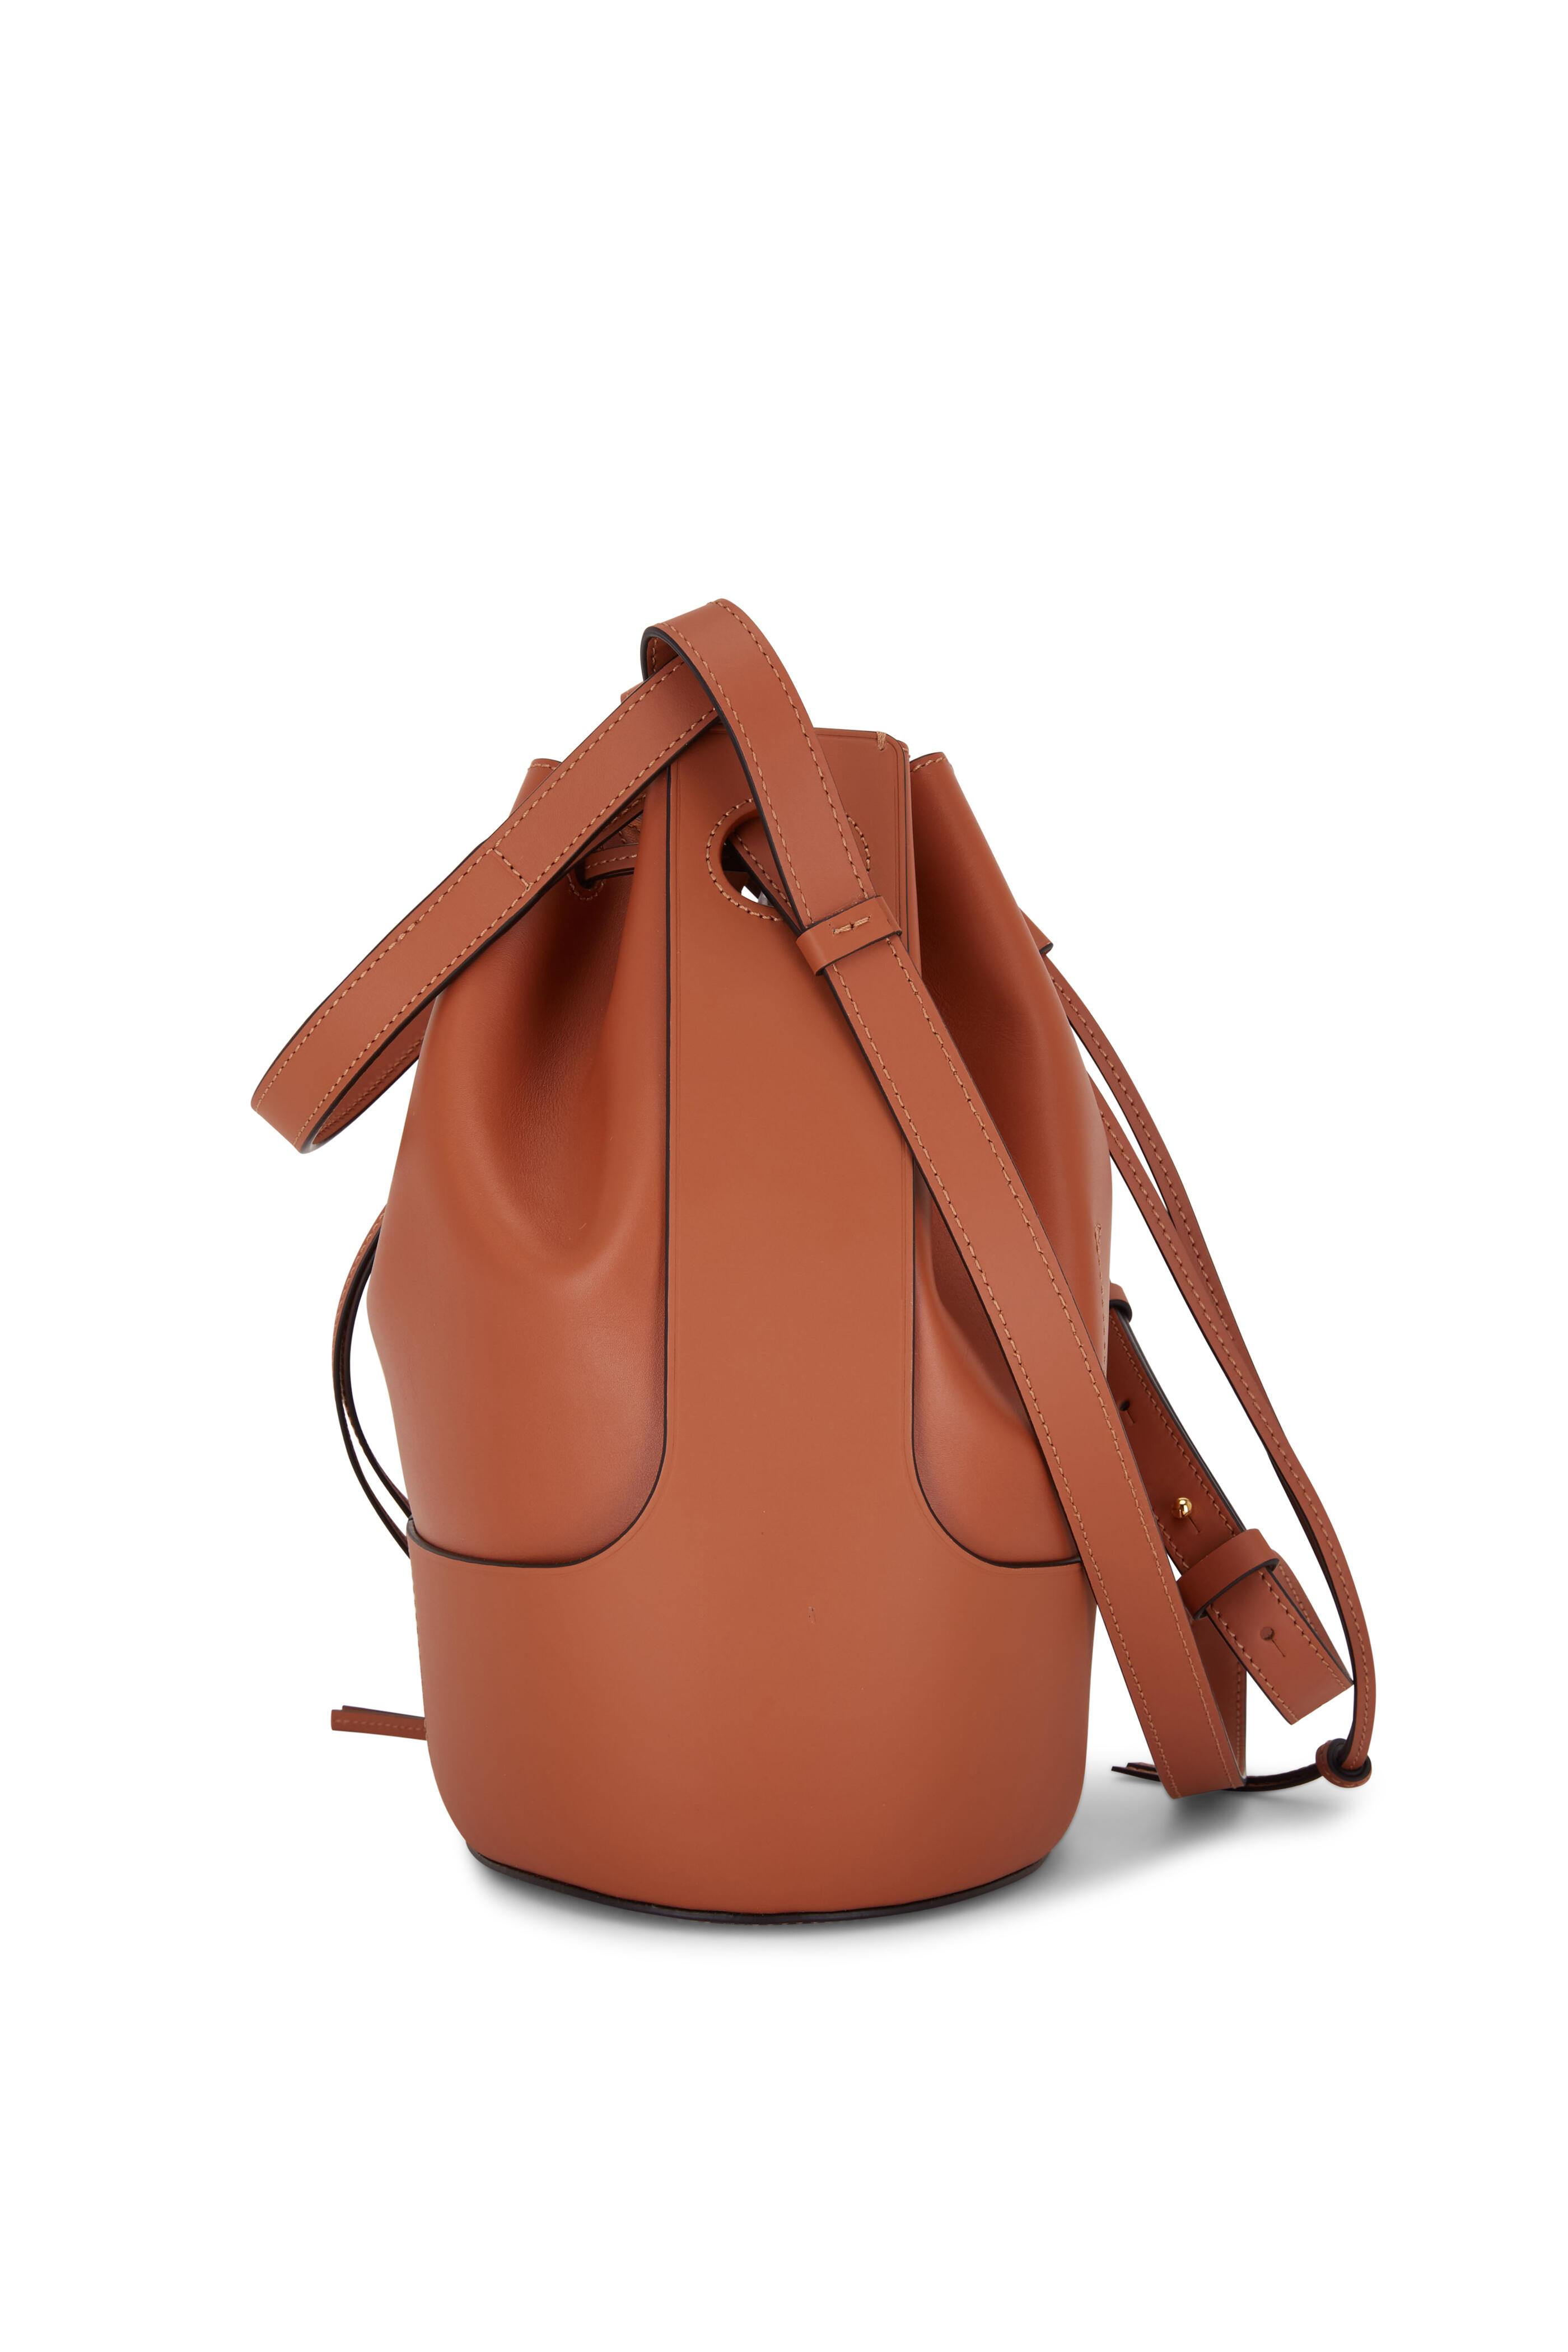 Loewe - Small Balloon Tan Smooth Leather Bag